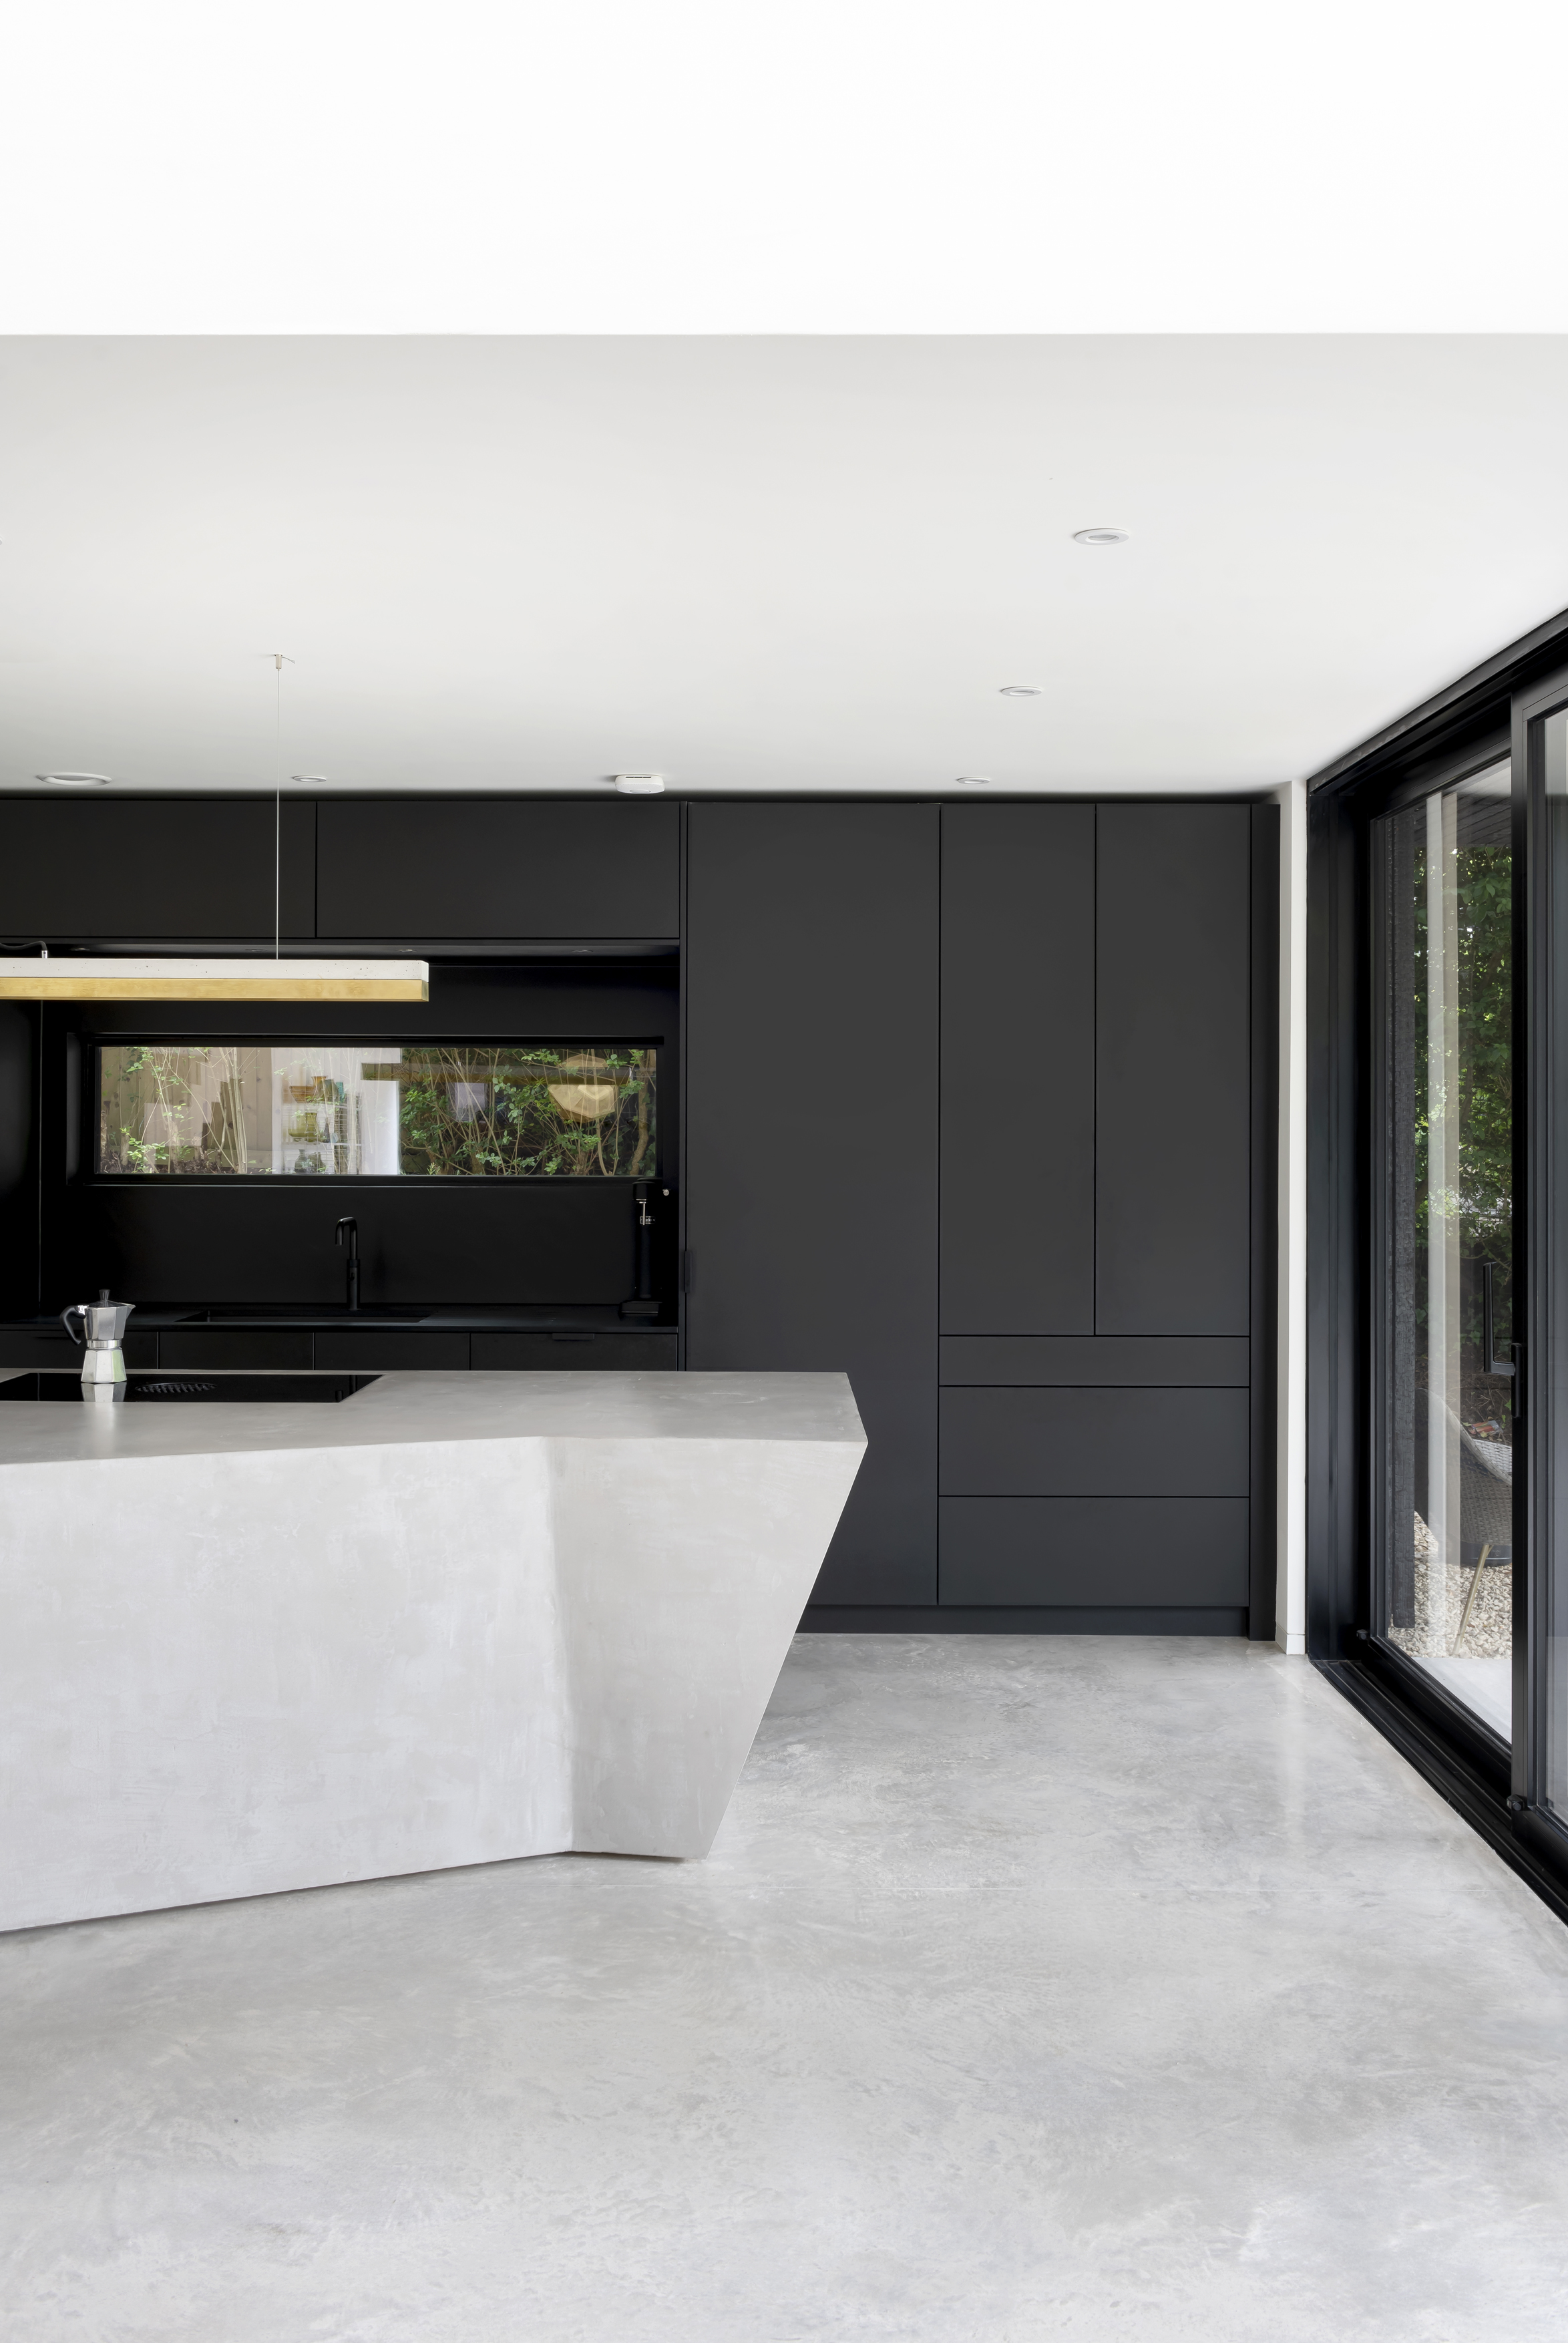 Bespoke Richlite clad kitchen, Origami concrete island, sliding black patio doors to garden